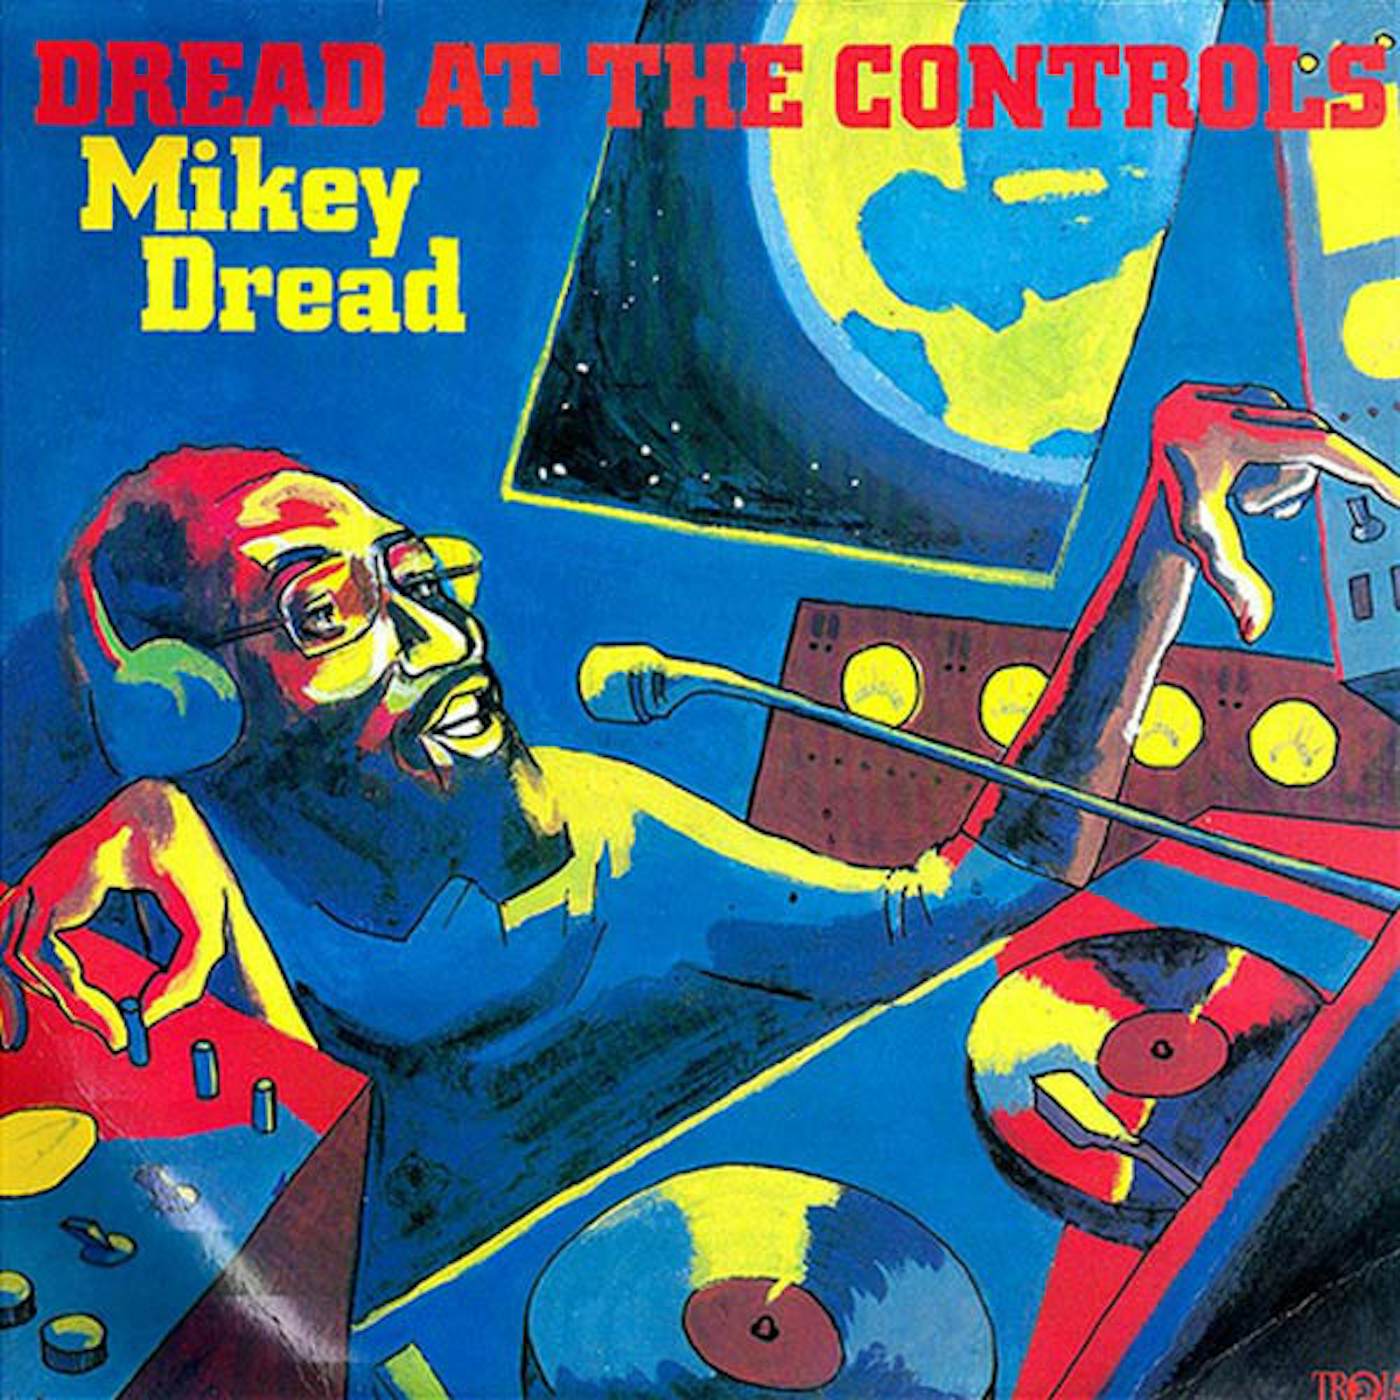 Mikey Dread AT THE CONTROLS Vinyl Record